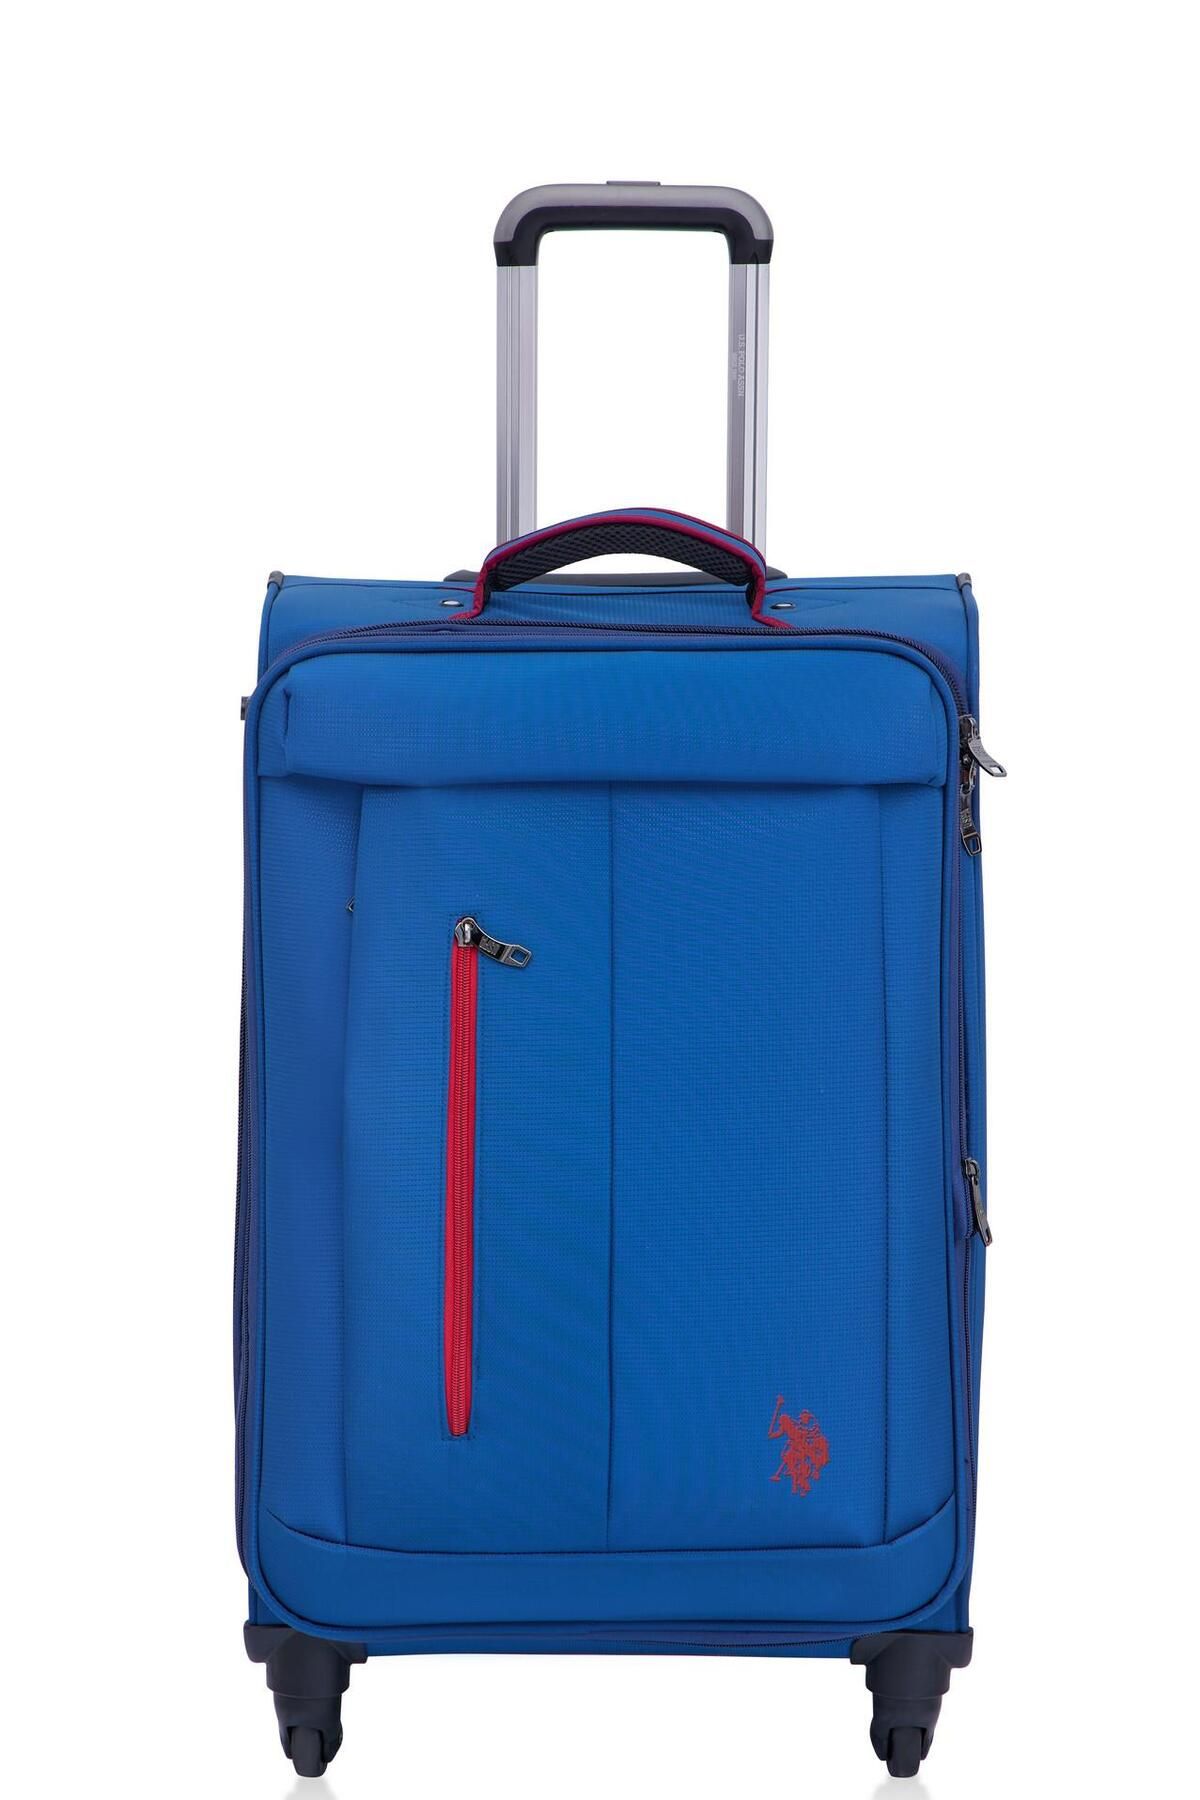 U.S. Polo Assn. PLVLZ22815C چمدان اندازه کابین آبی یونیکس